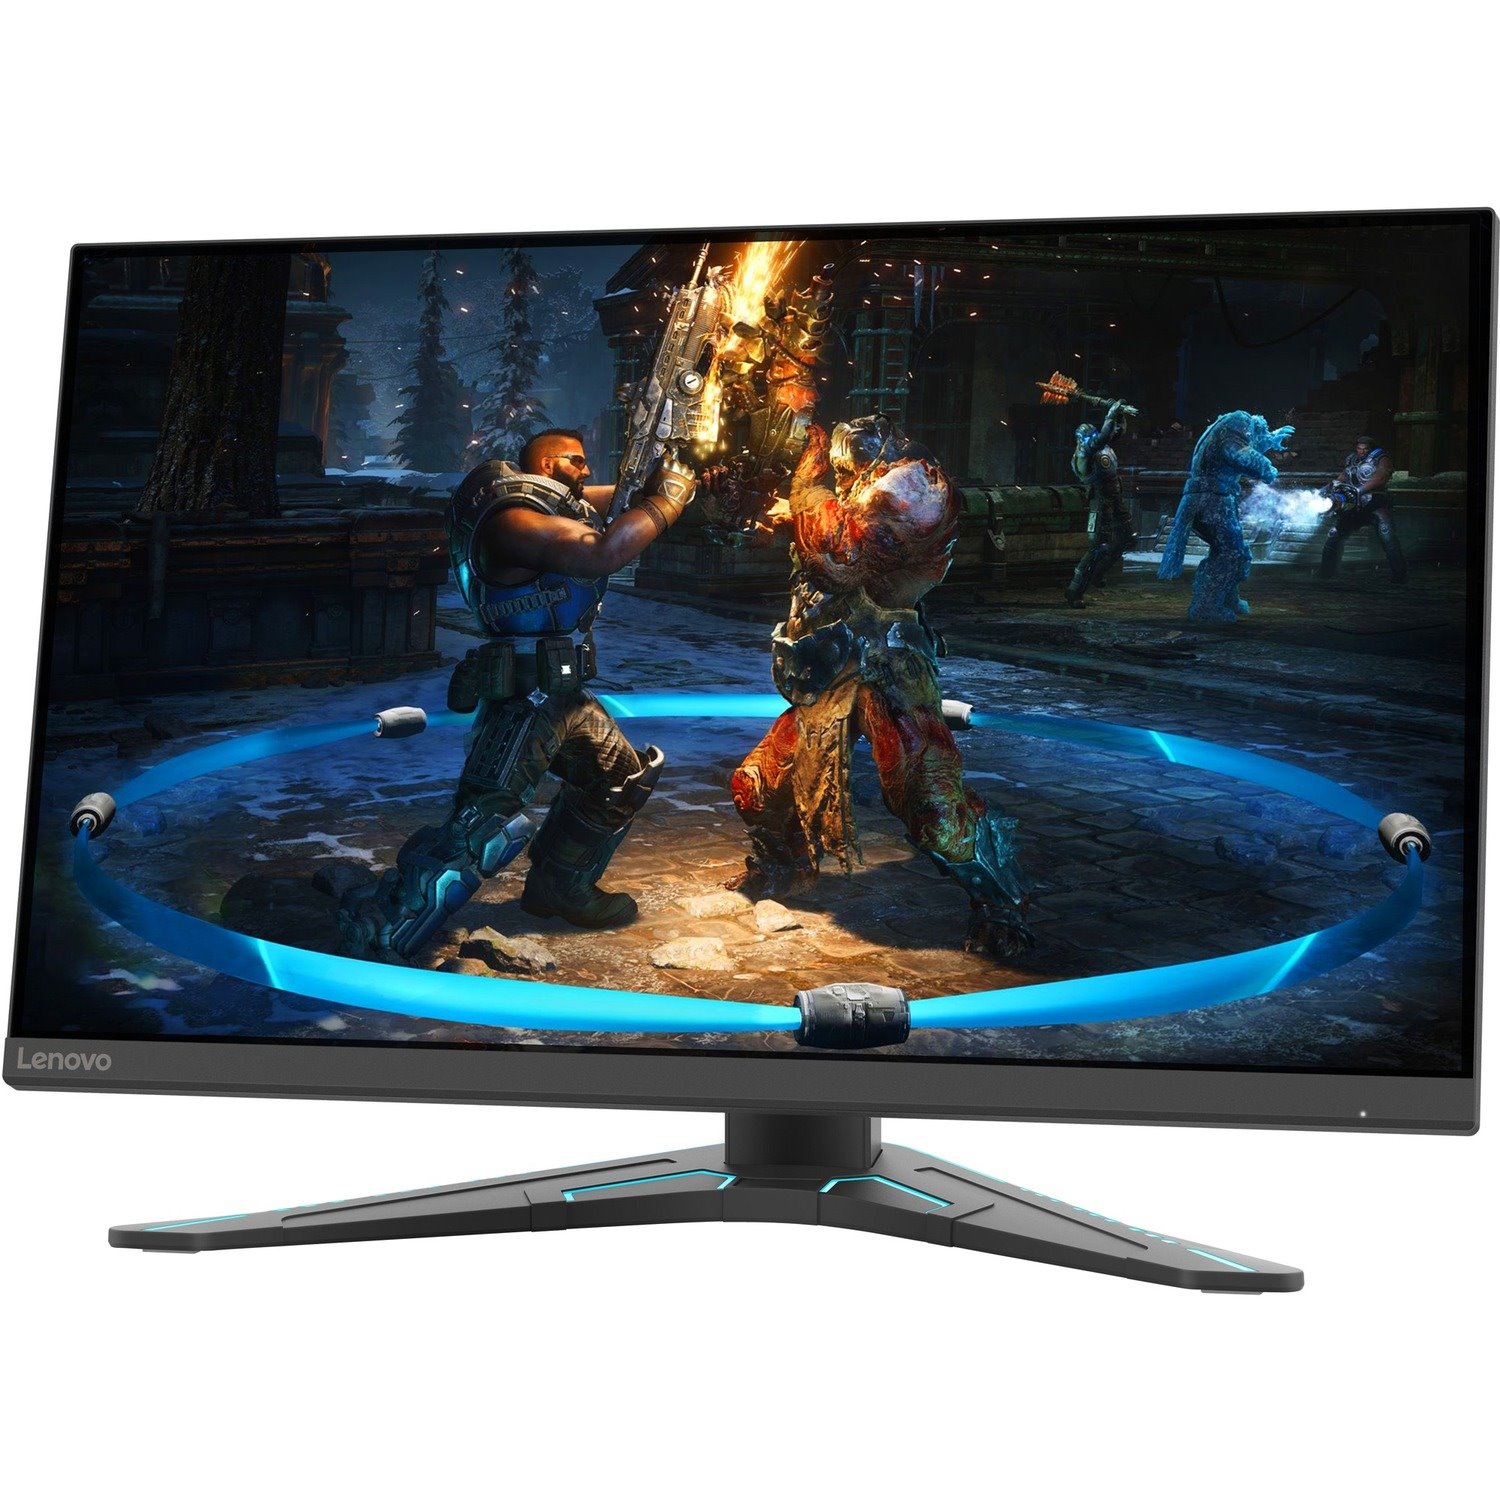 Lenovo G27-20 27" Full HD WLED Gaming LCD Monitor - 16:9 - Raven Black